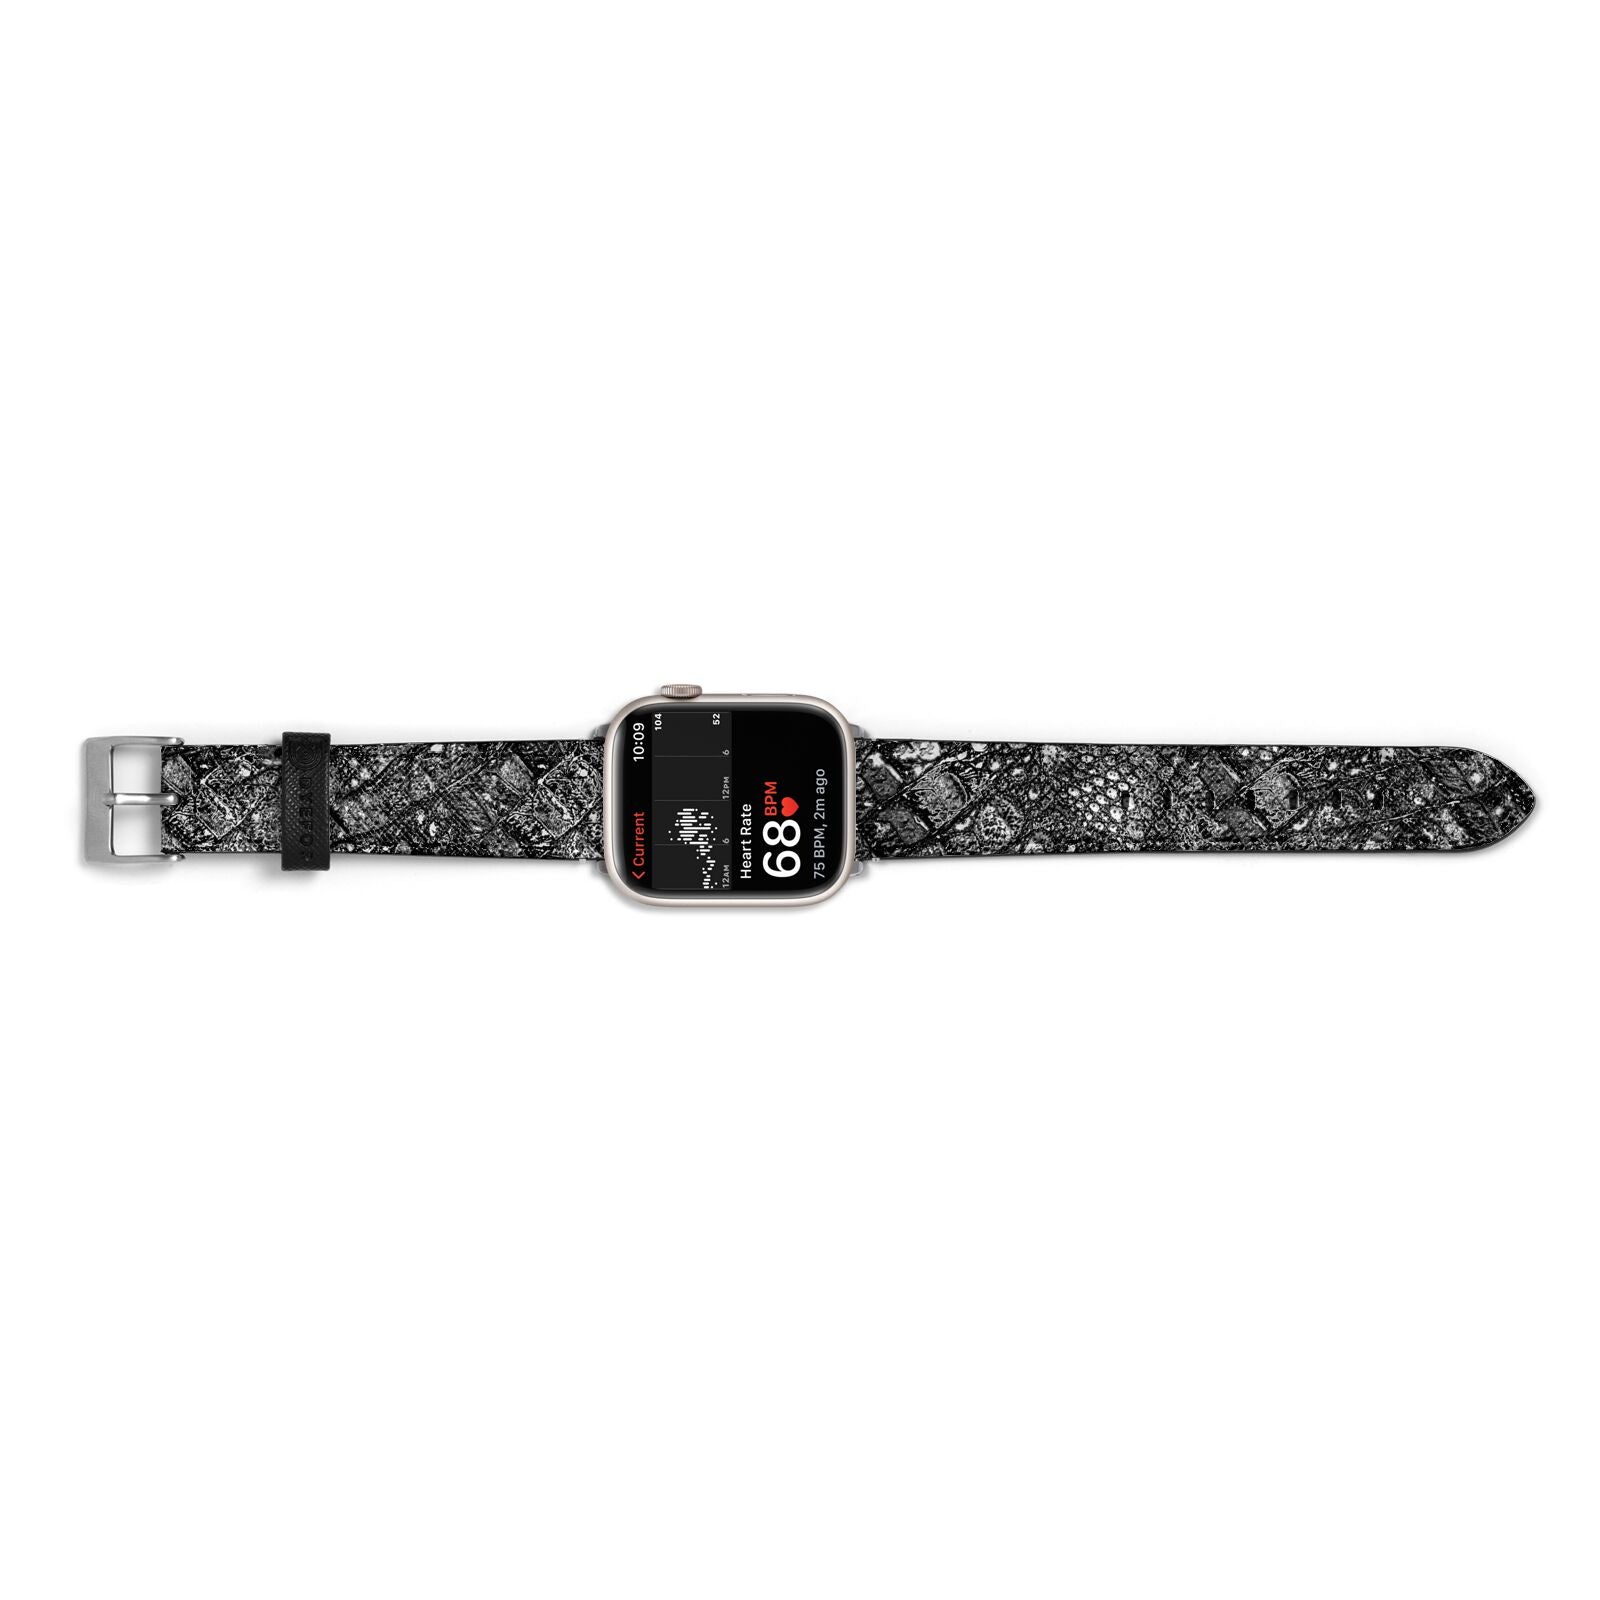 Snakeskin Design Apple Watch Strap Size 38mm Landscape Image Silver Hardware